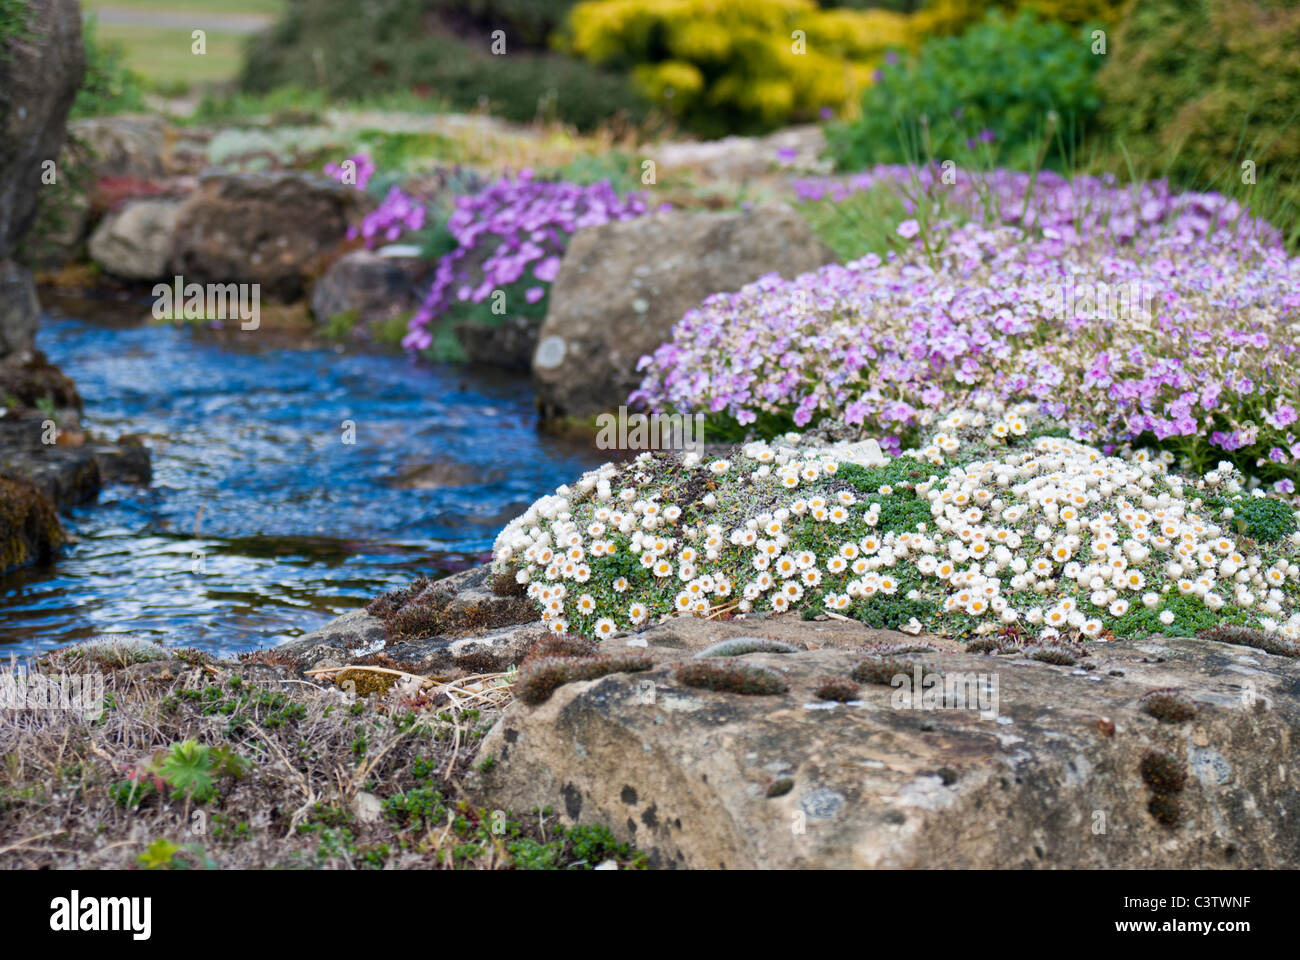 Alpine rock garden with water feature Stock Photo